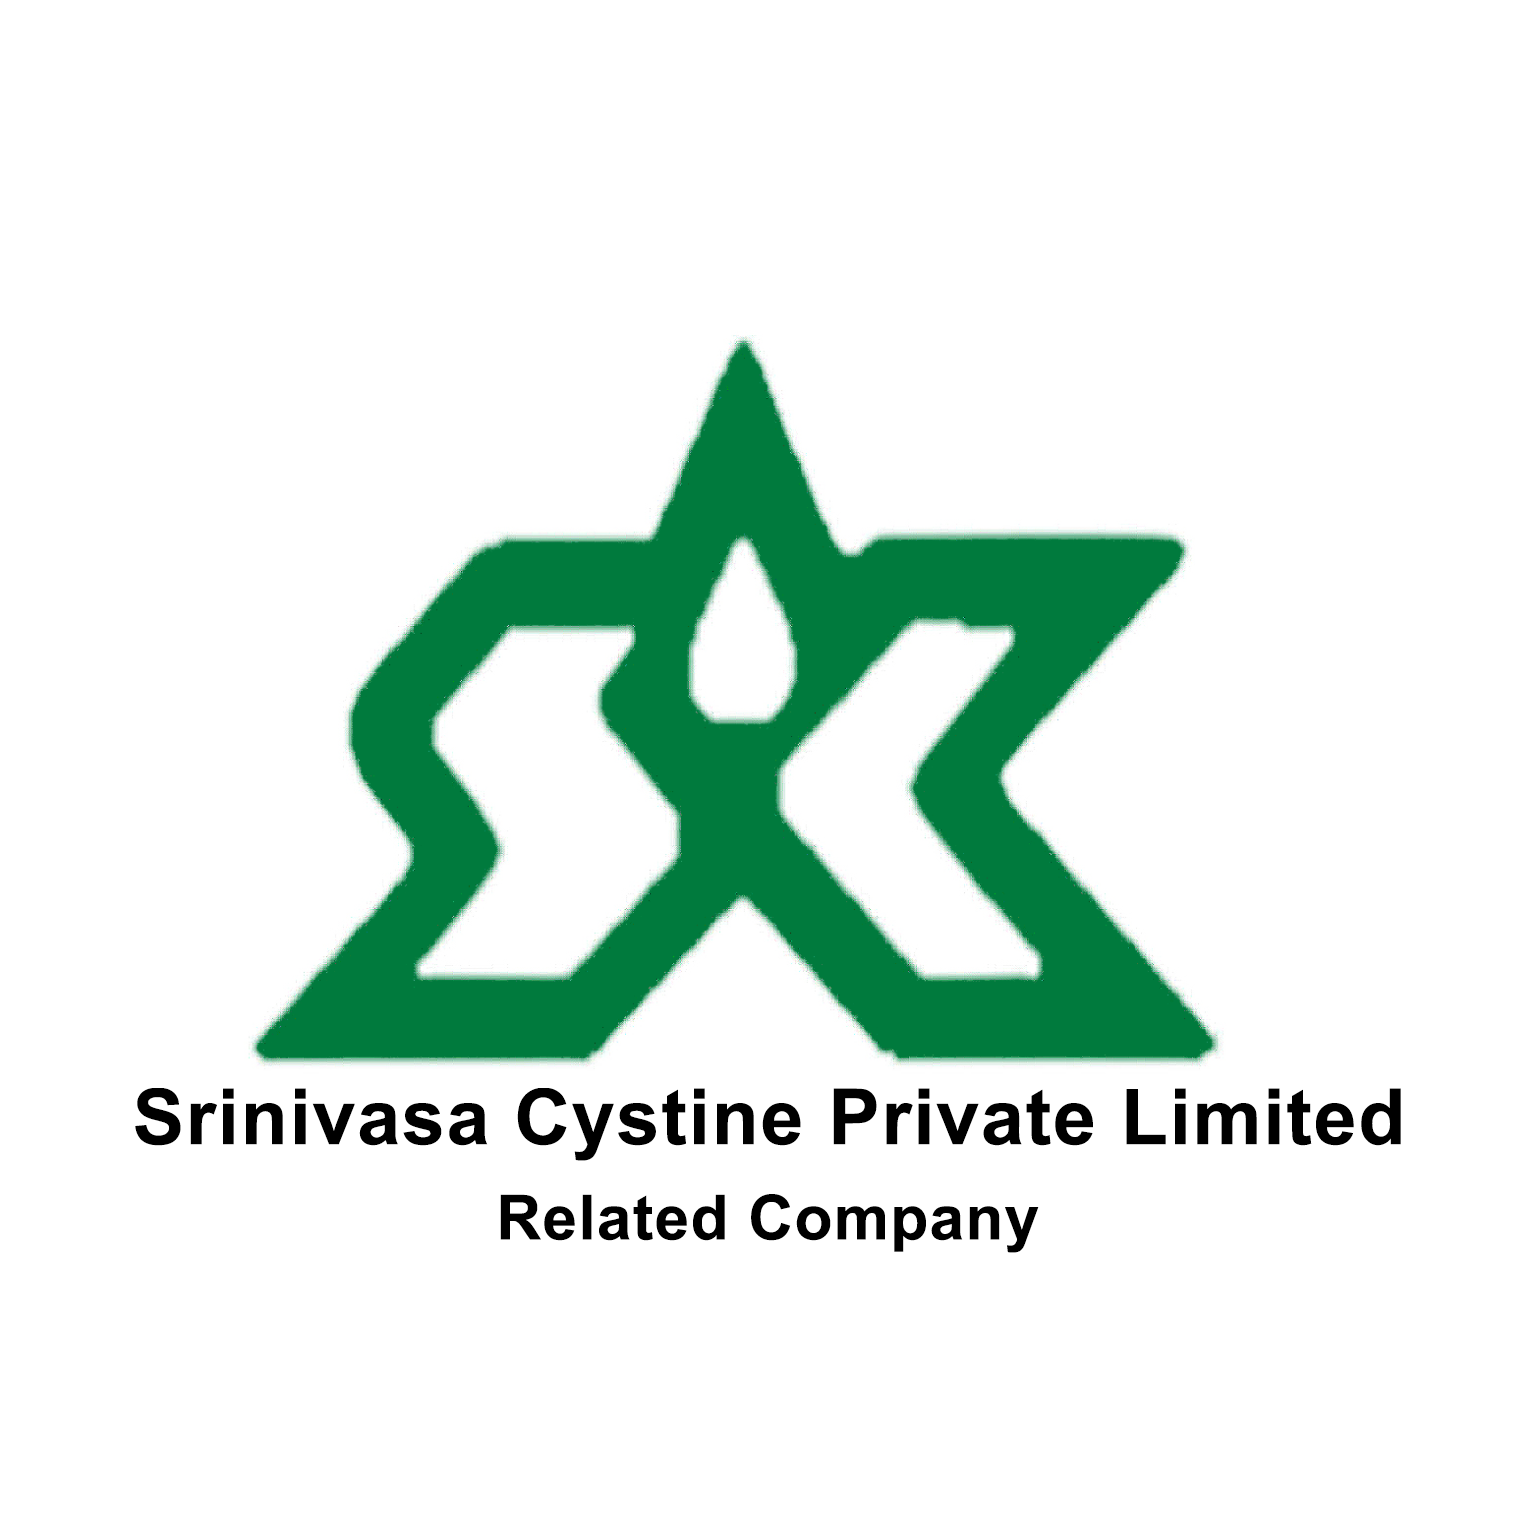 srinivasa cystine private limited related company